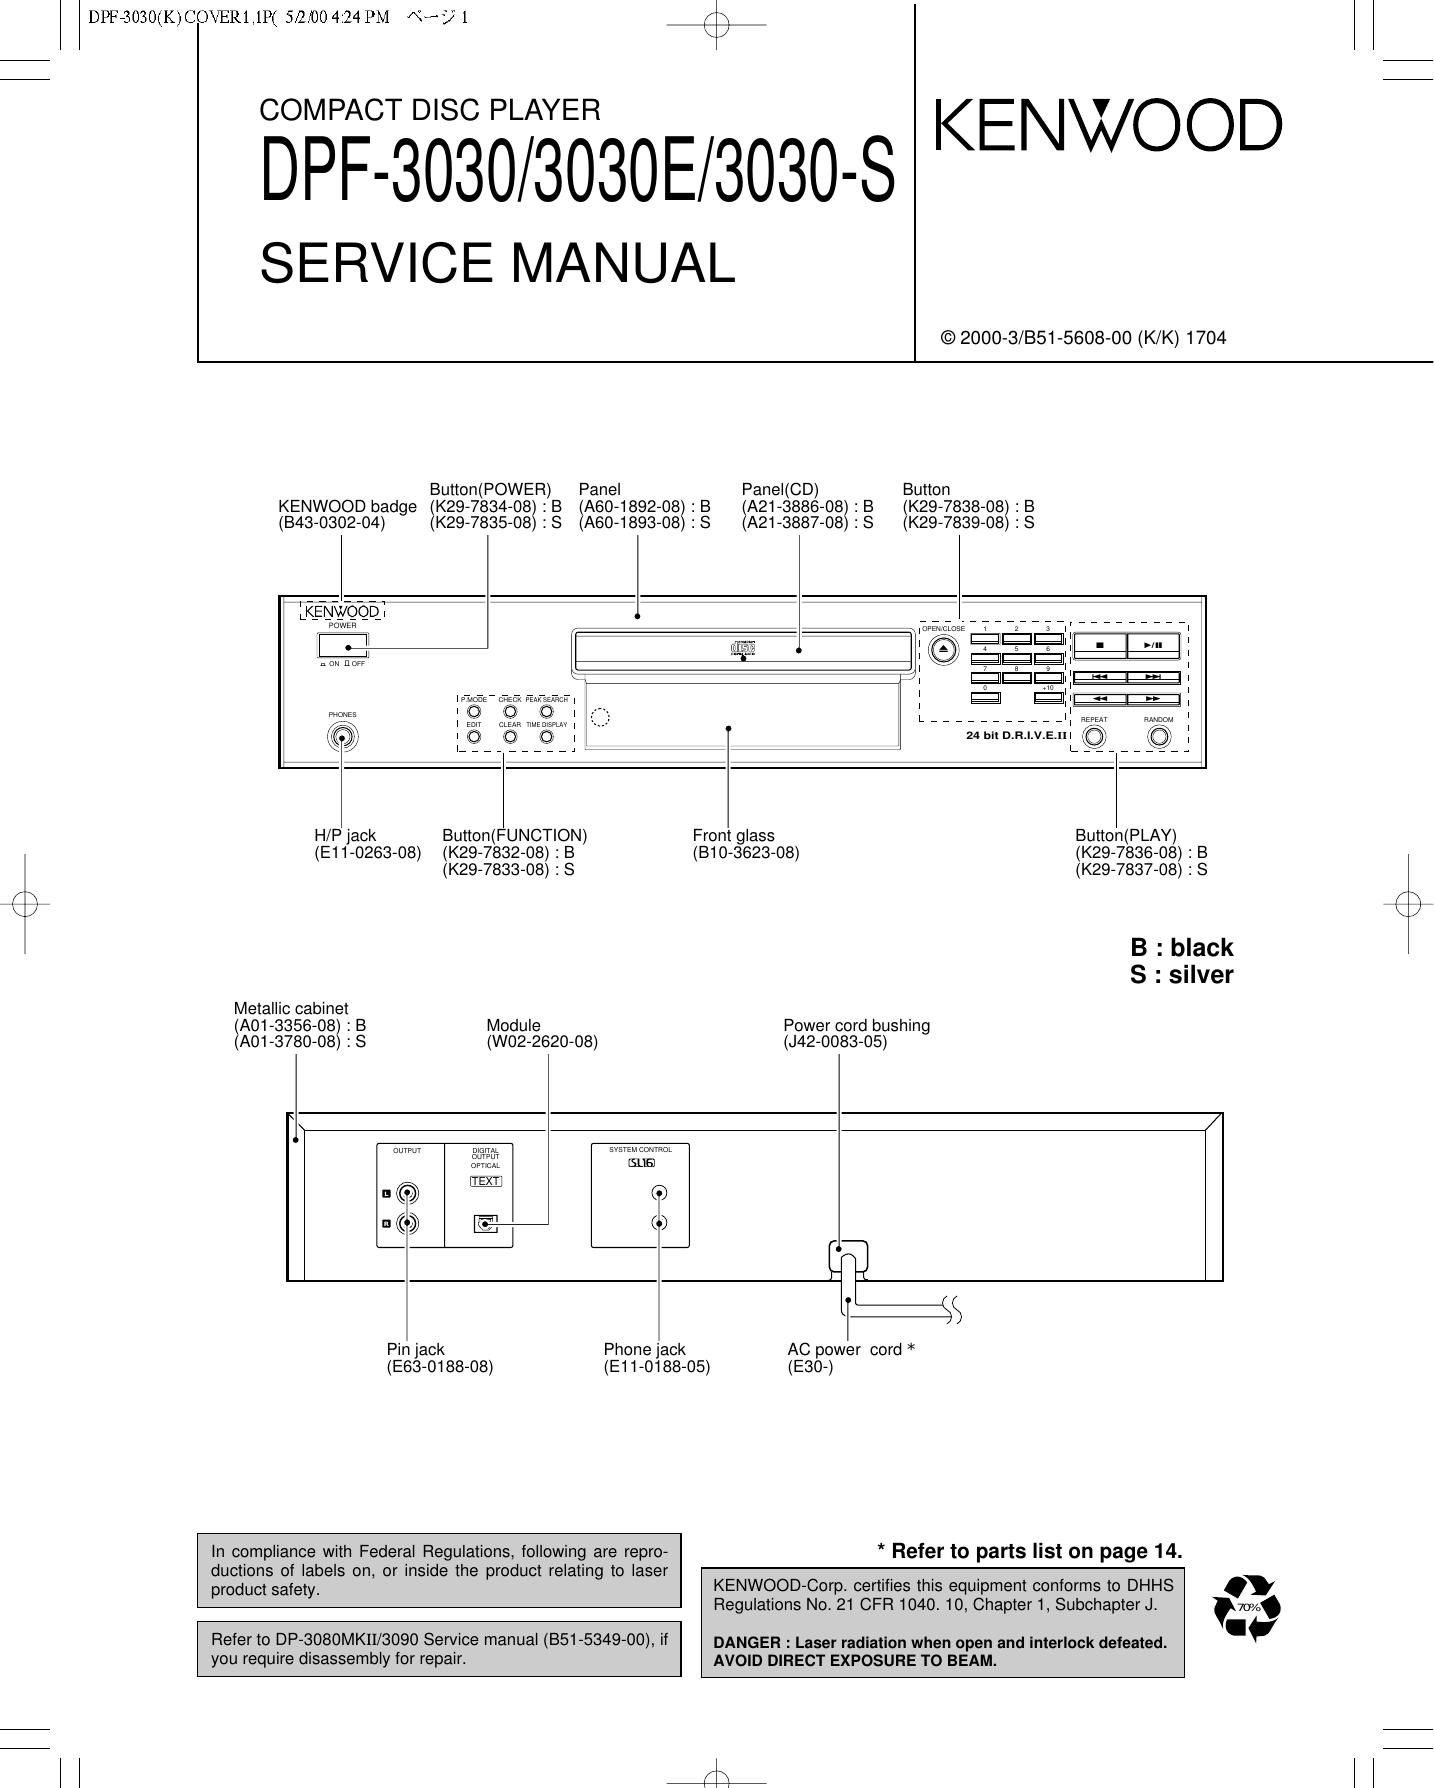 Kenwood DPF 3030 E Service Manual